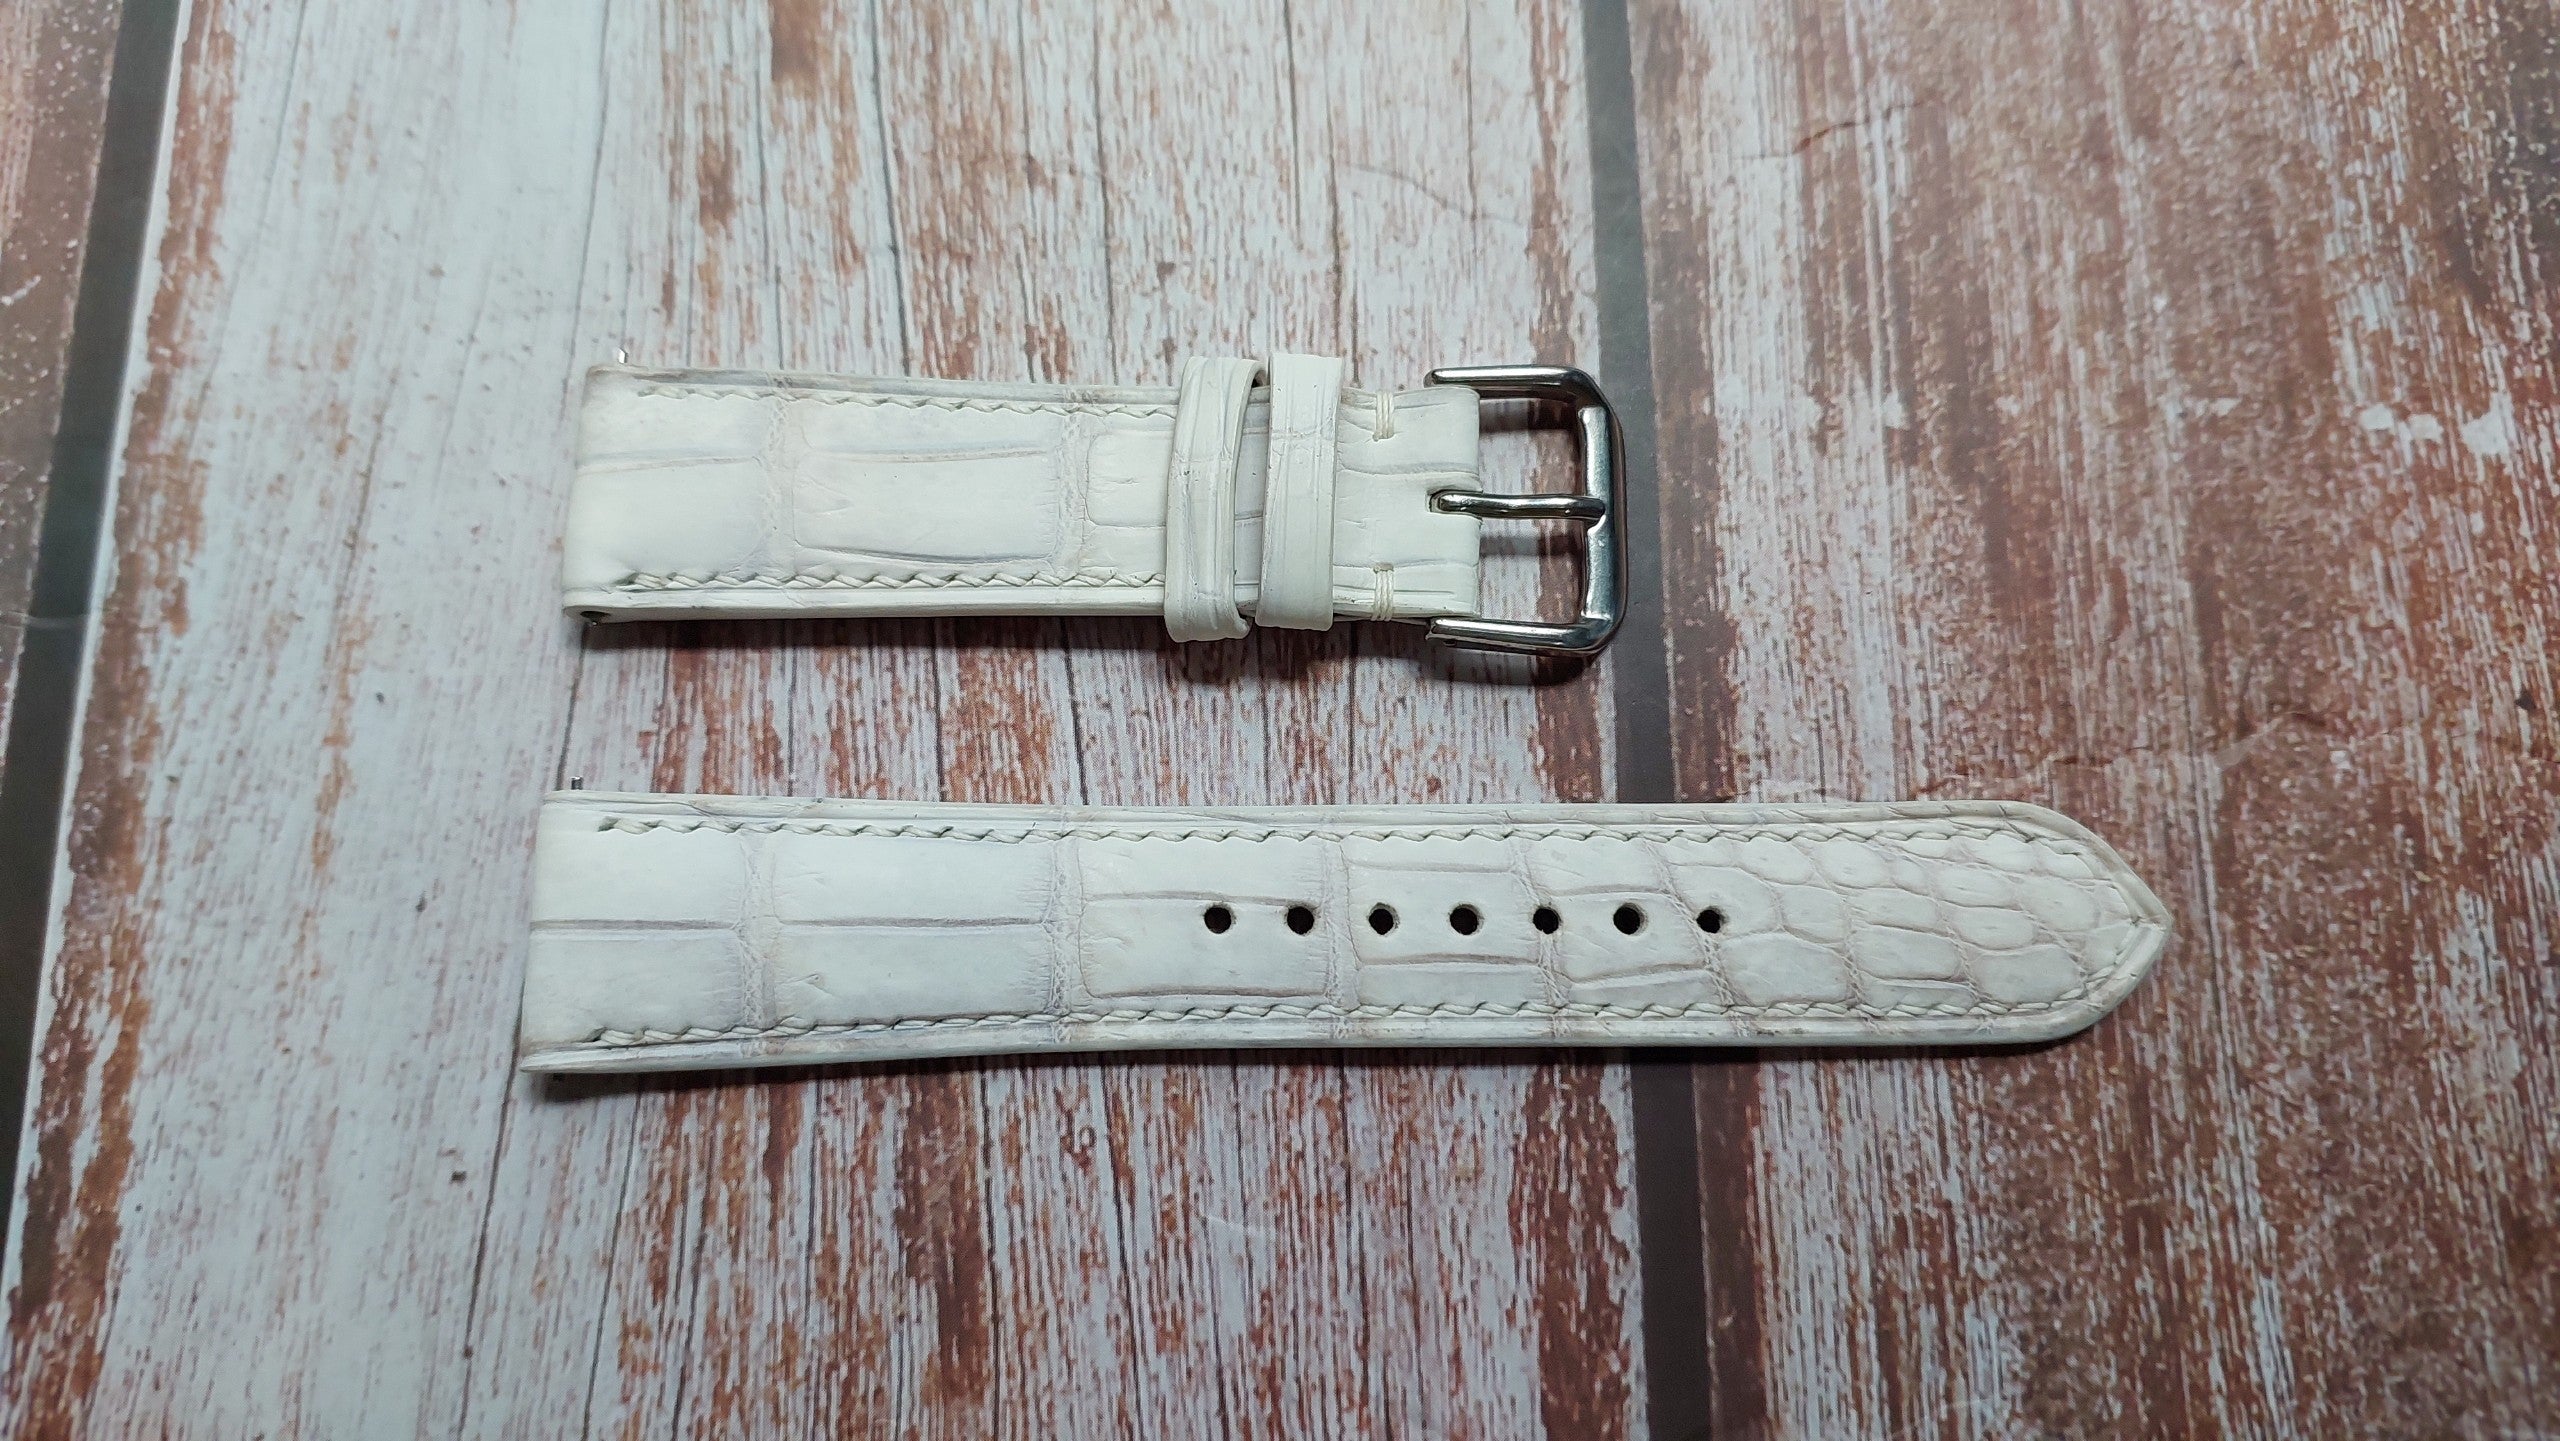 Crocodile Leather Watch Strap - Sand White